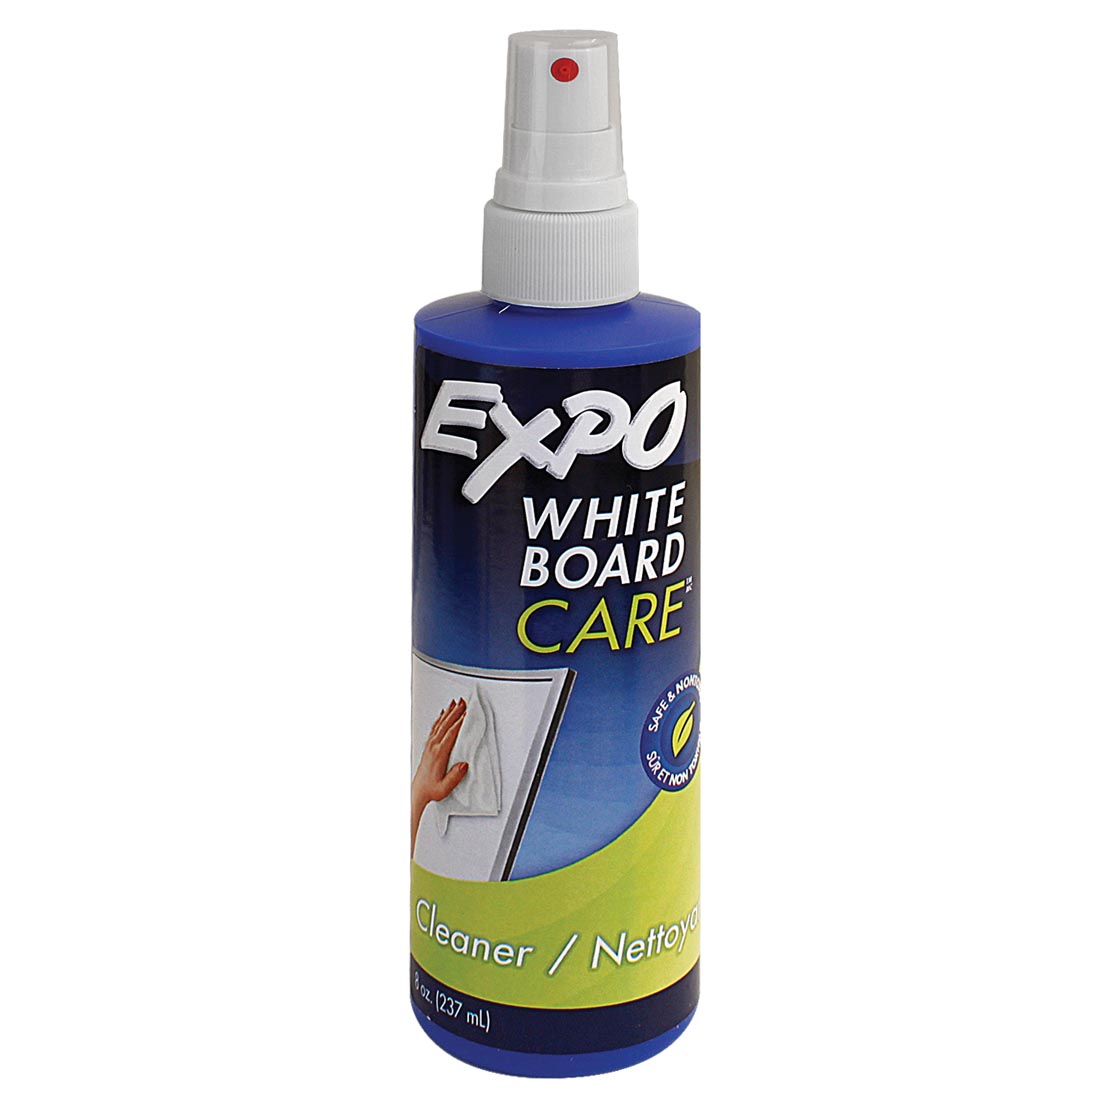 Spray Bottle of Expo White Board Care